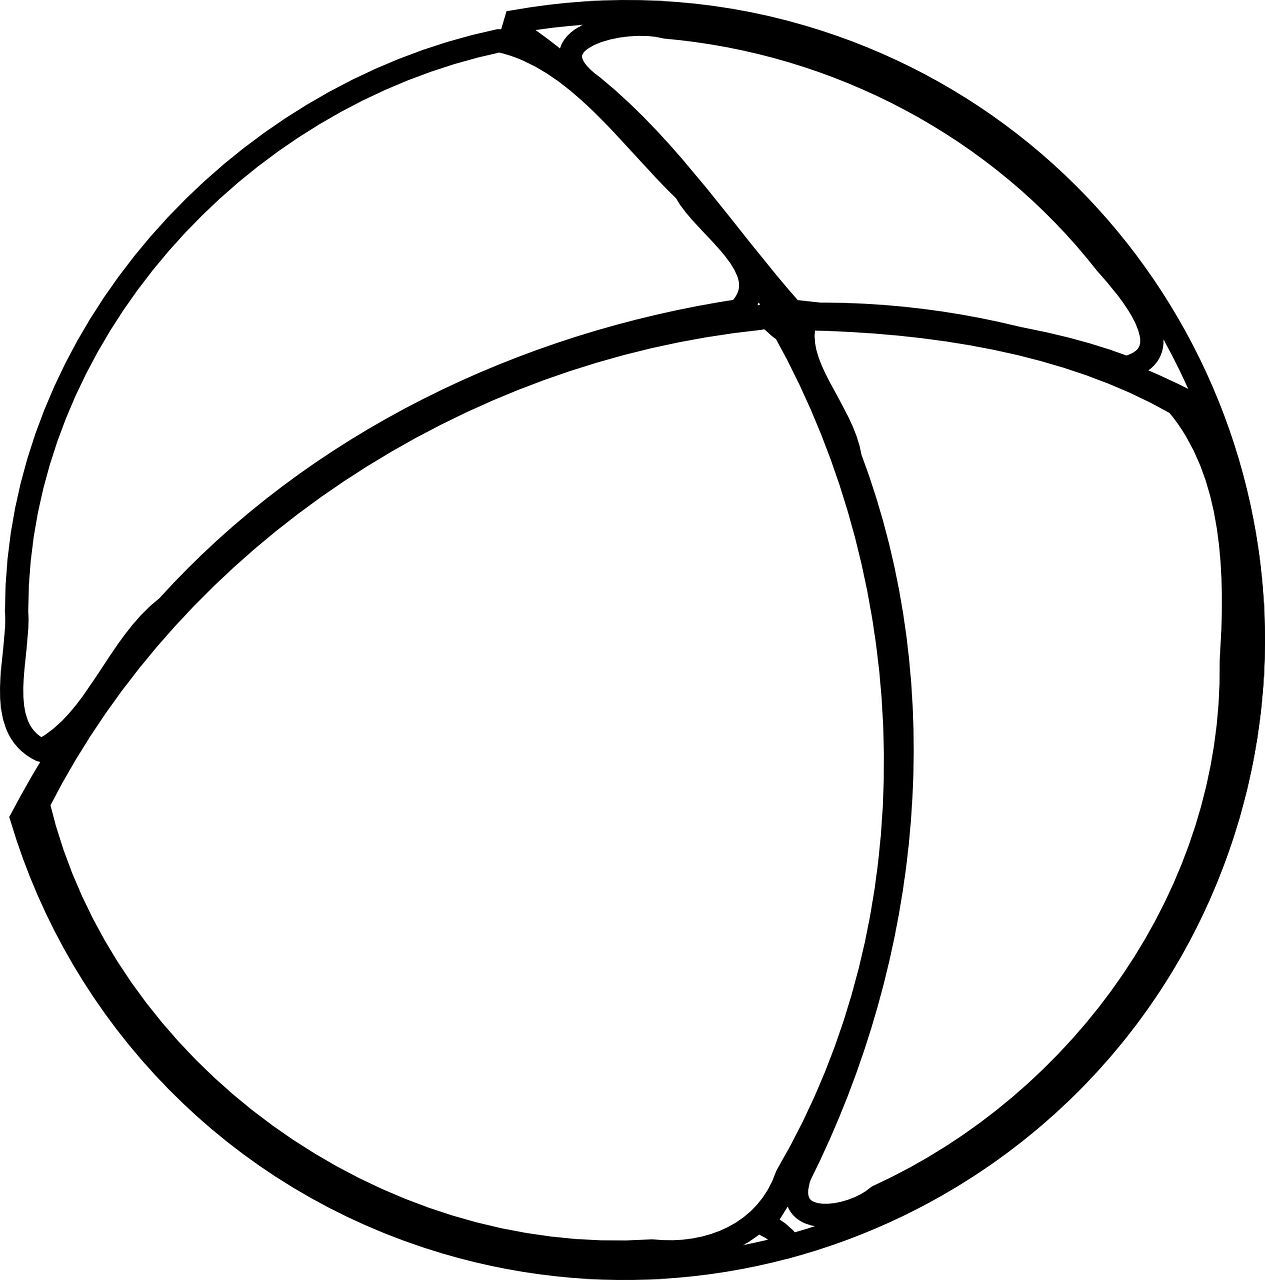 Beach ball,volleyball,ball,round,game - free image from needpix.com